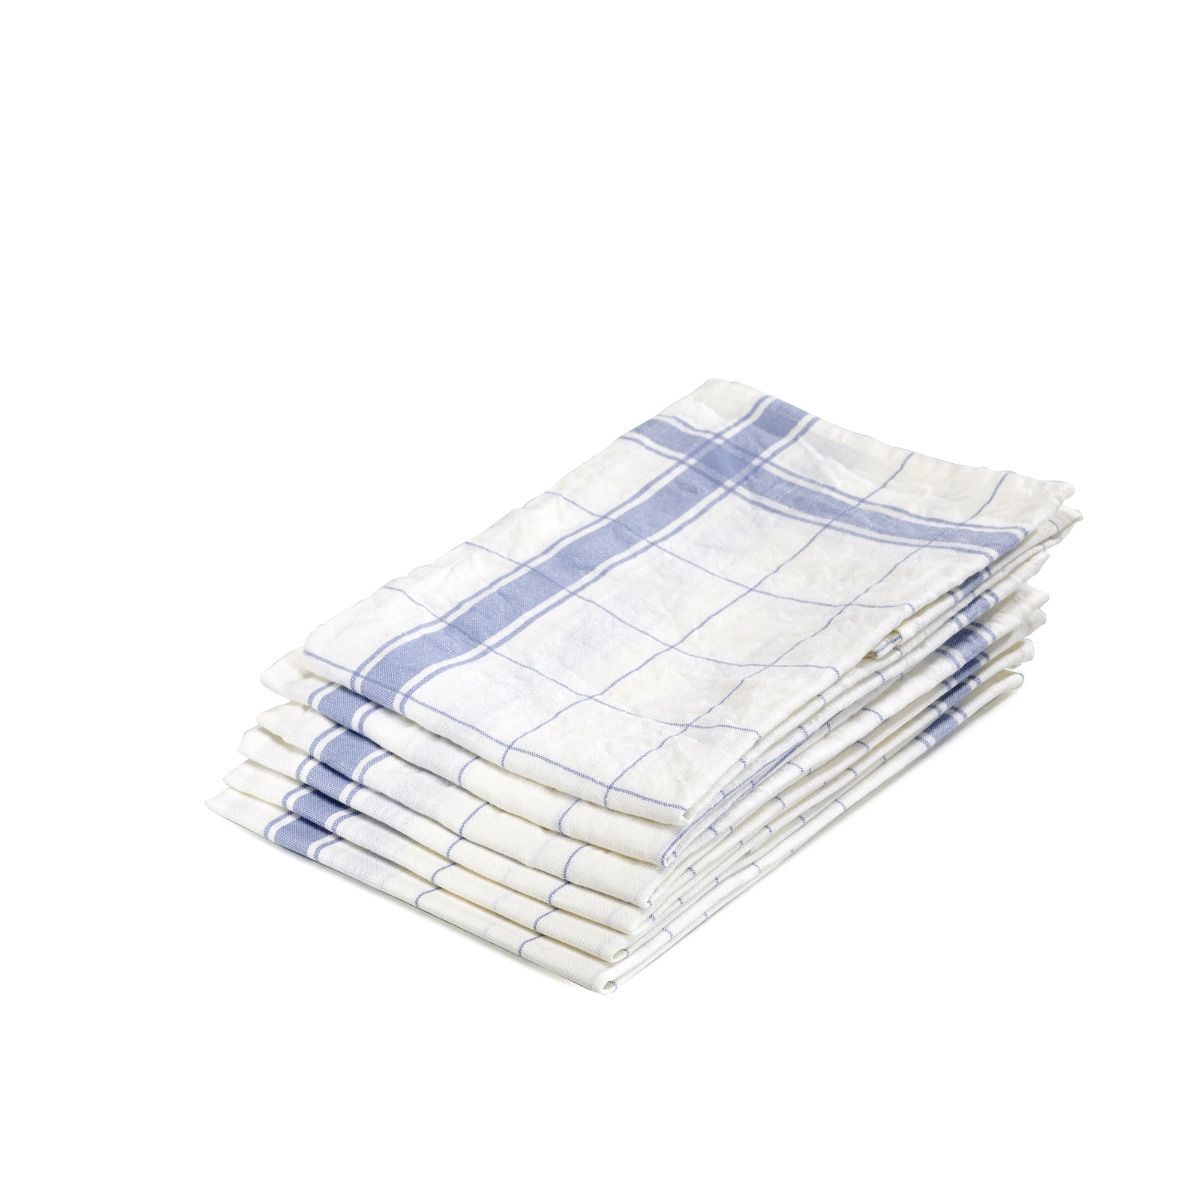 https://www.finelinens.com/media/catalog/product/1/8/189711___Parma_Tea_Towels_Light_Blue.jpg